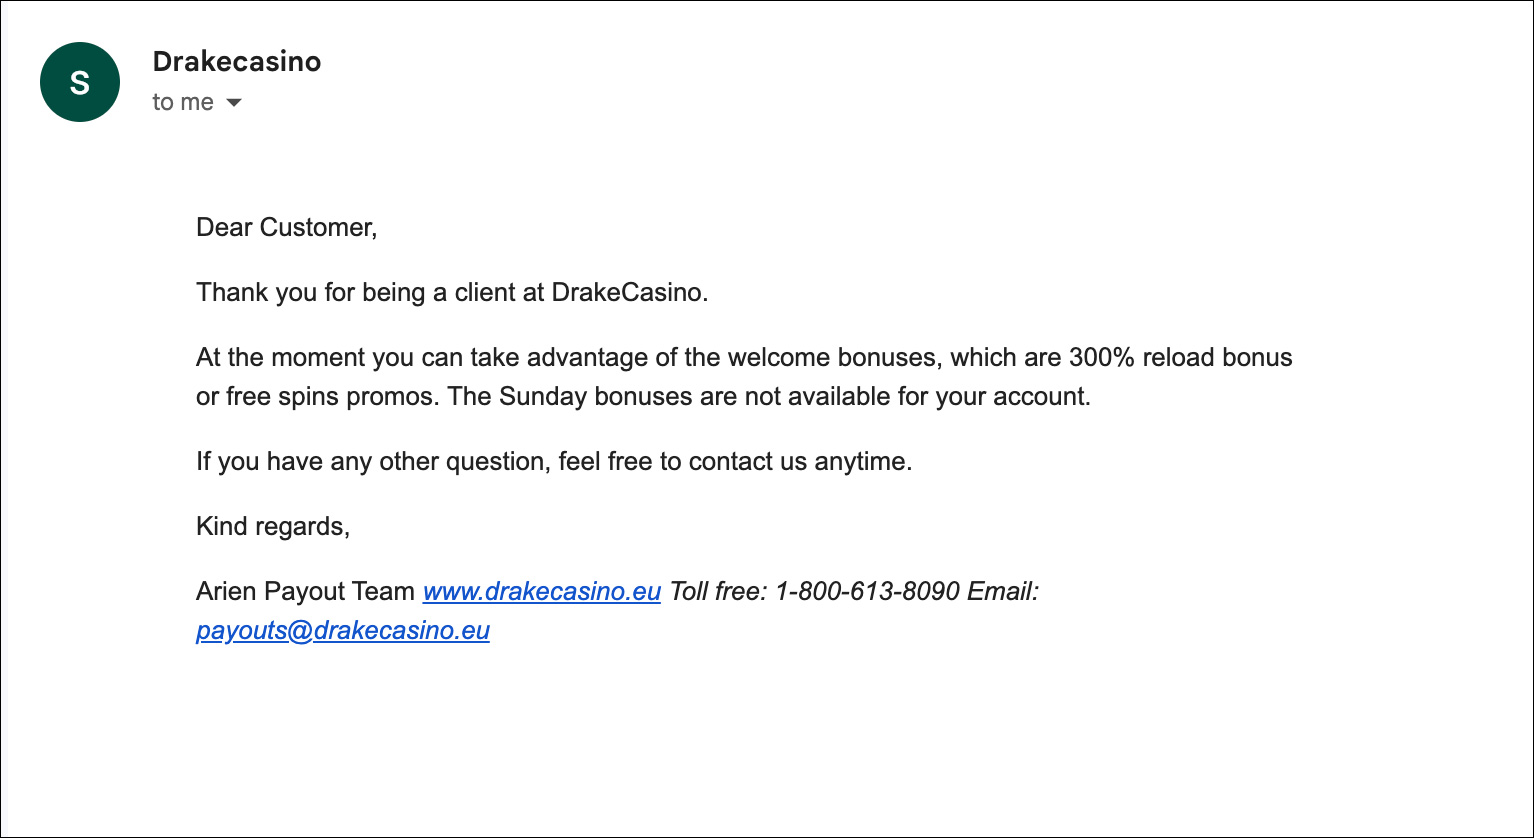 Drake Casino Email Customer Support